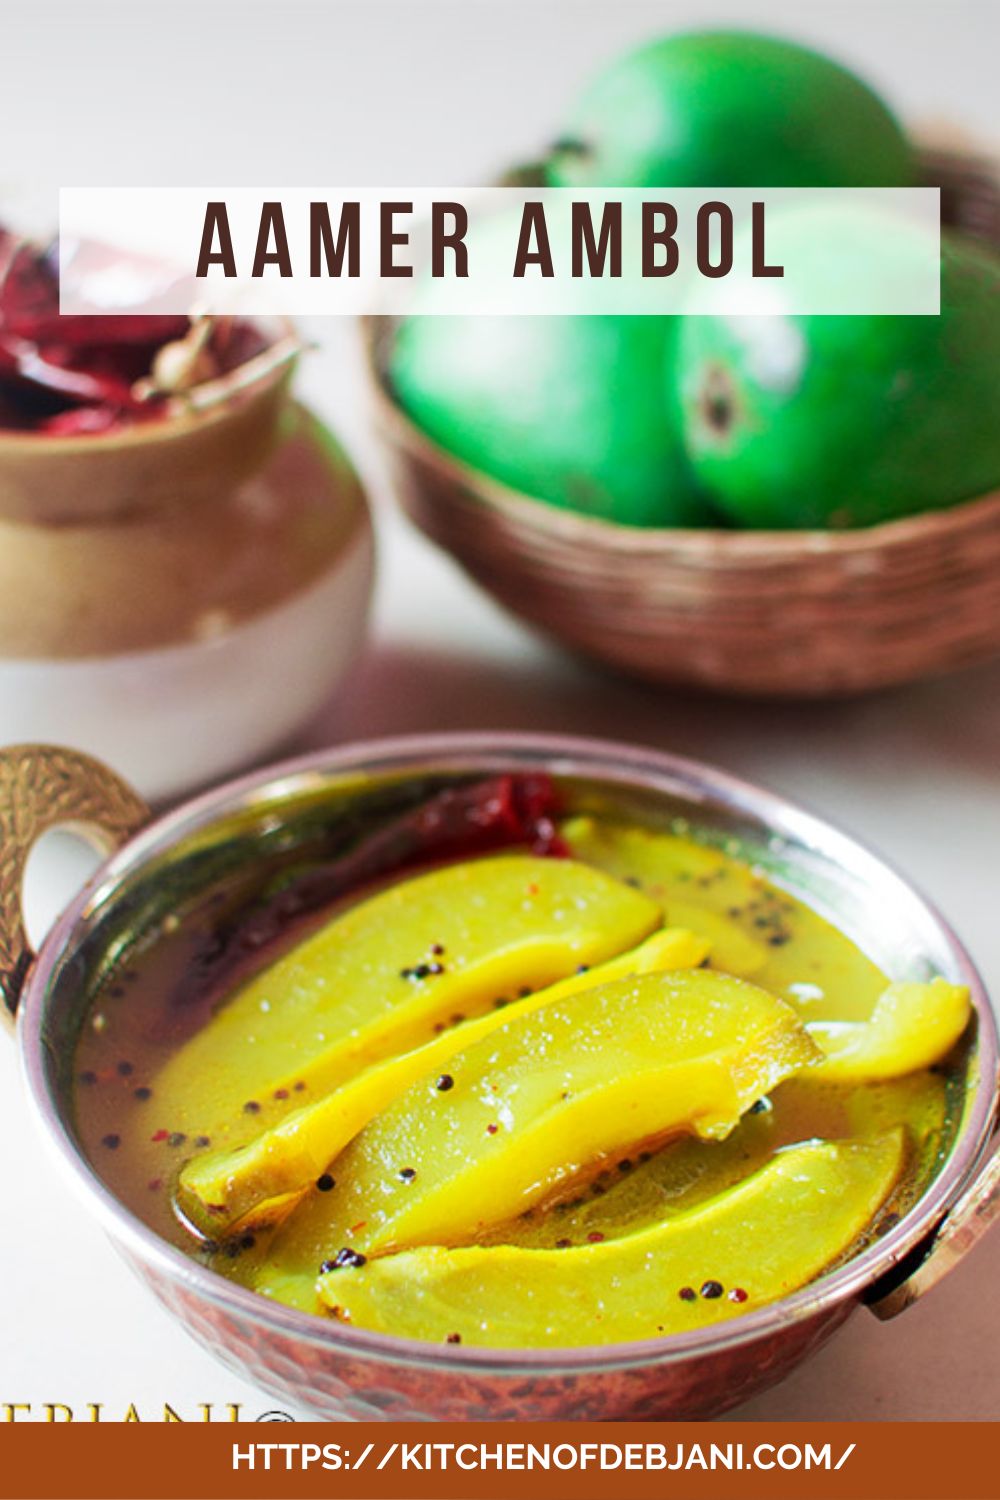 %Bengali AameAr Ambol Recipe pinterest pin